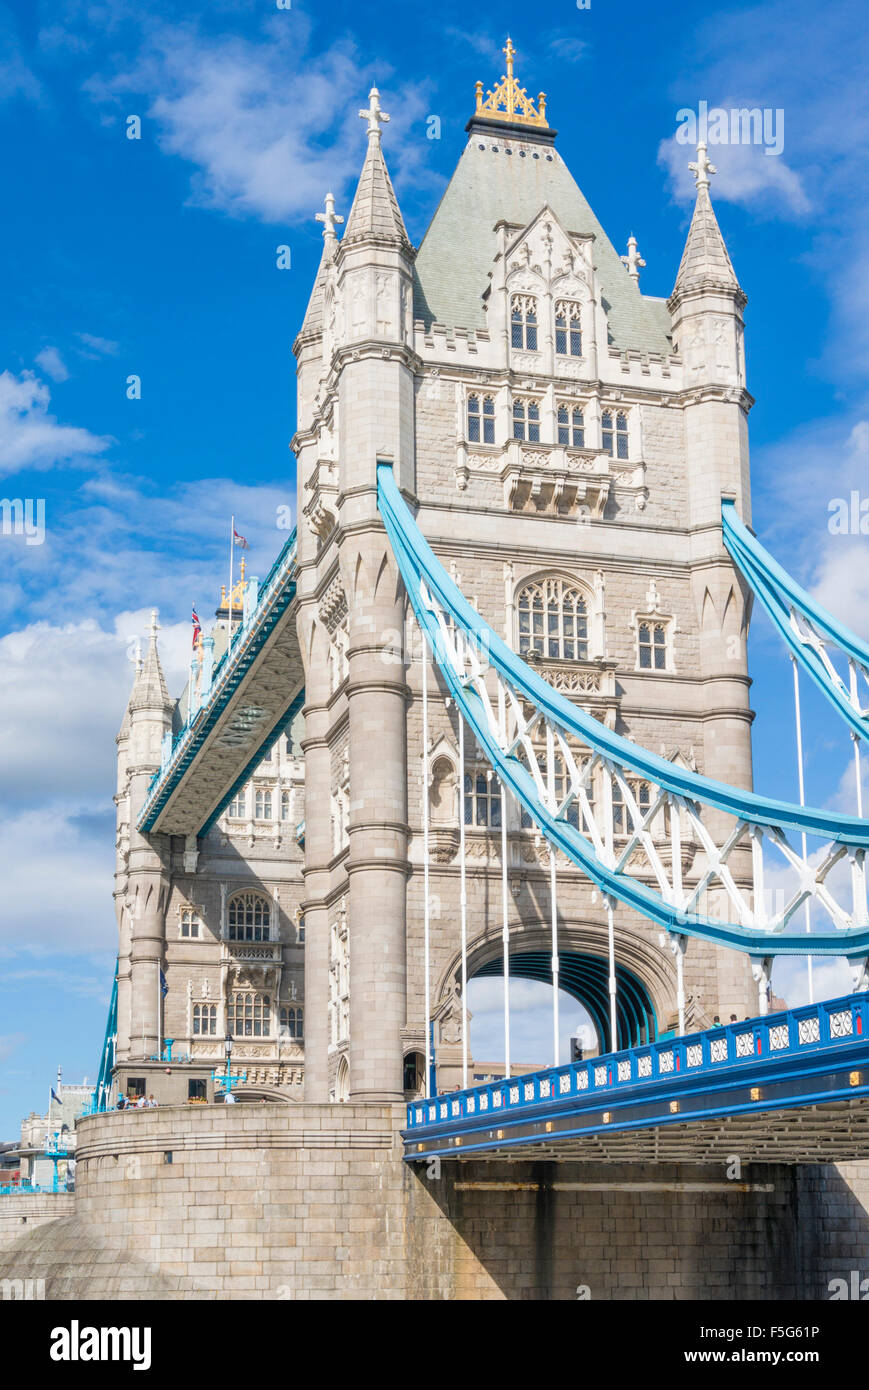 Tower Bridge and River Thames City of London England GB UK EU Europe Stock Photo